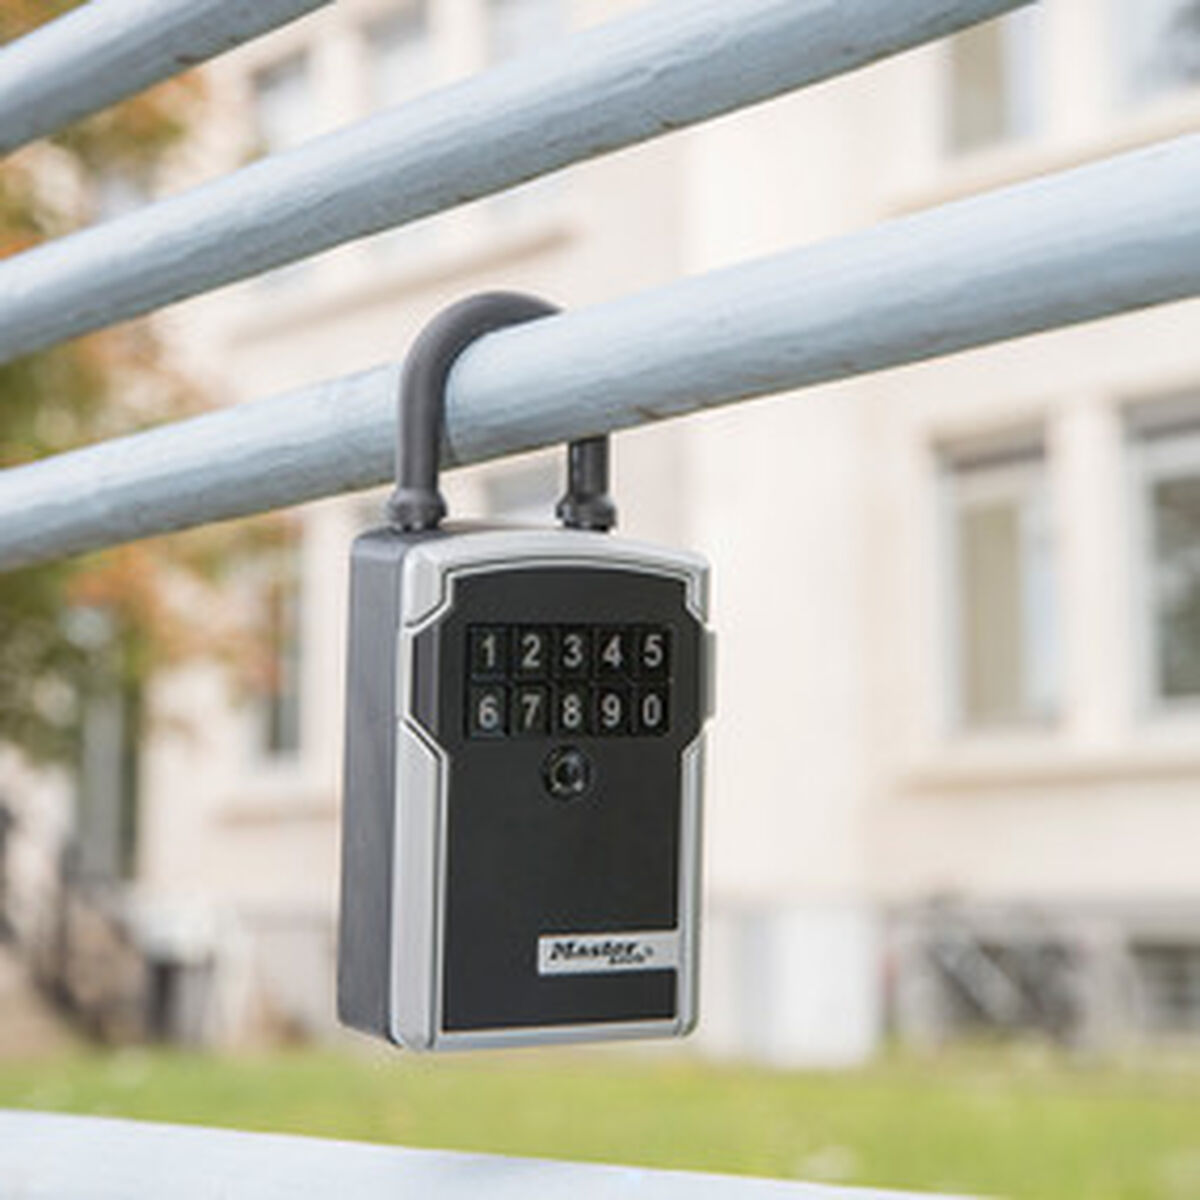 Сейф Master Lock 5440EURD ключи Чёрный/Серебристый цинк 18 x 8 x 6 cm (1 штук)